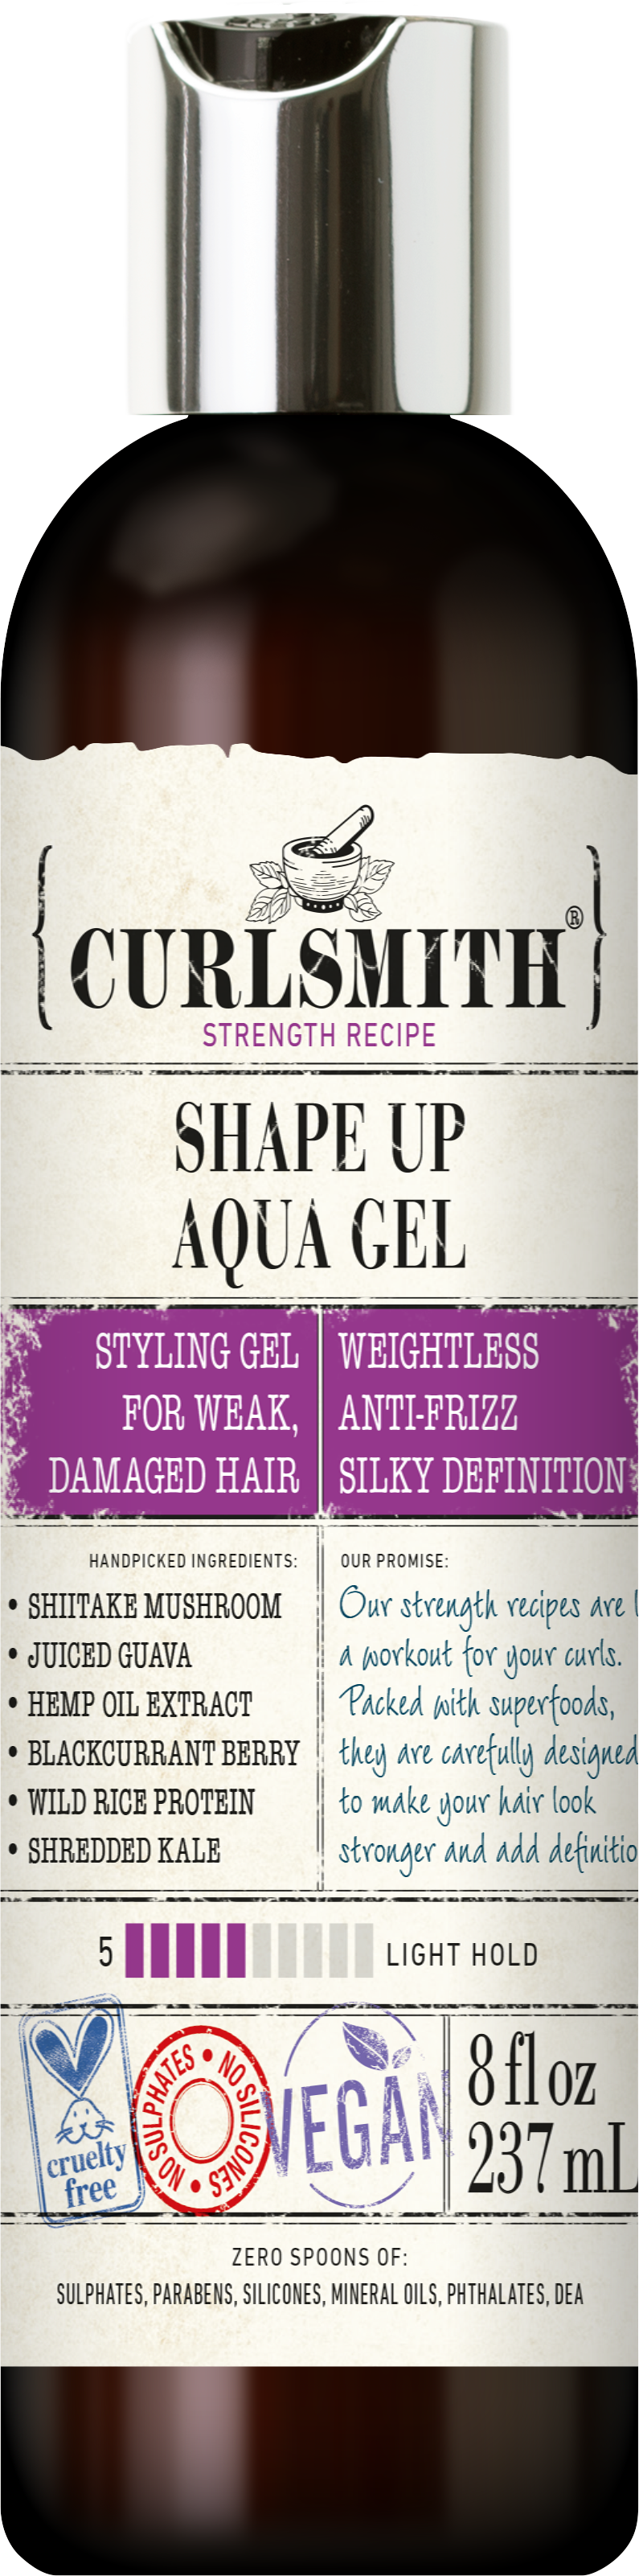 Curlsmith Shape Up Aqua Gel